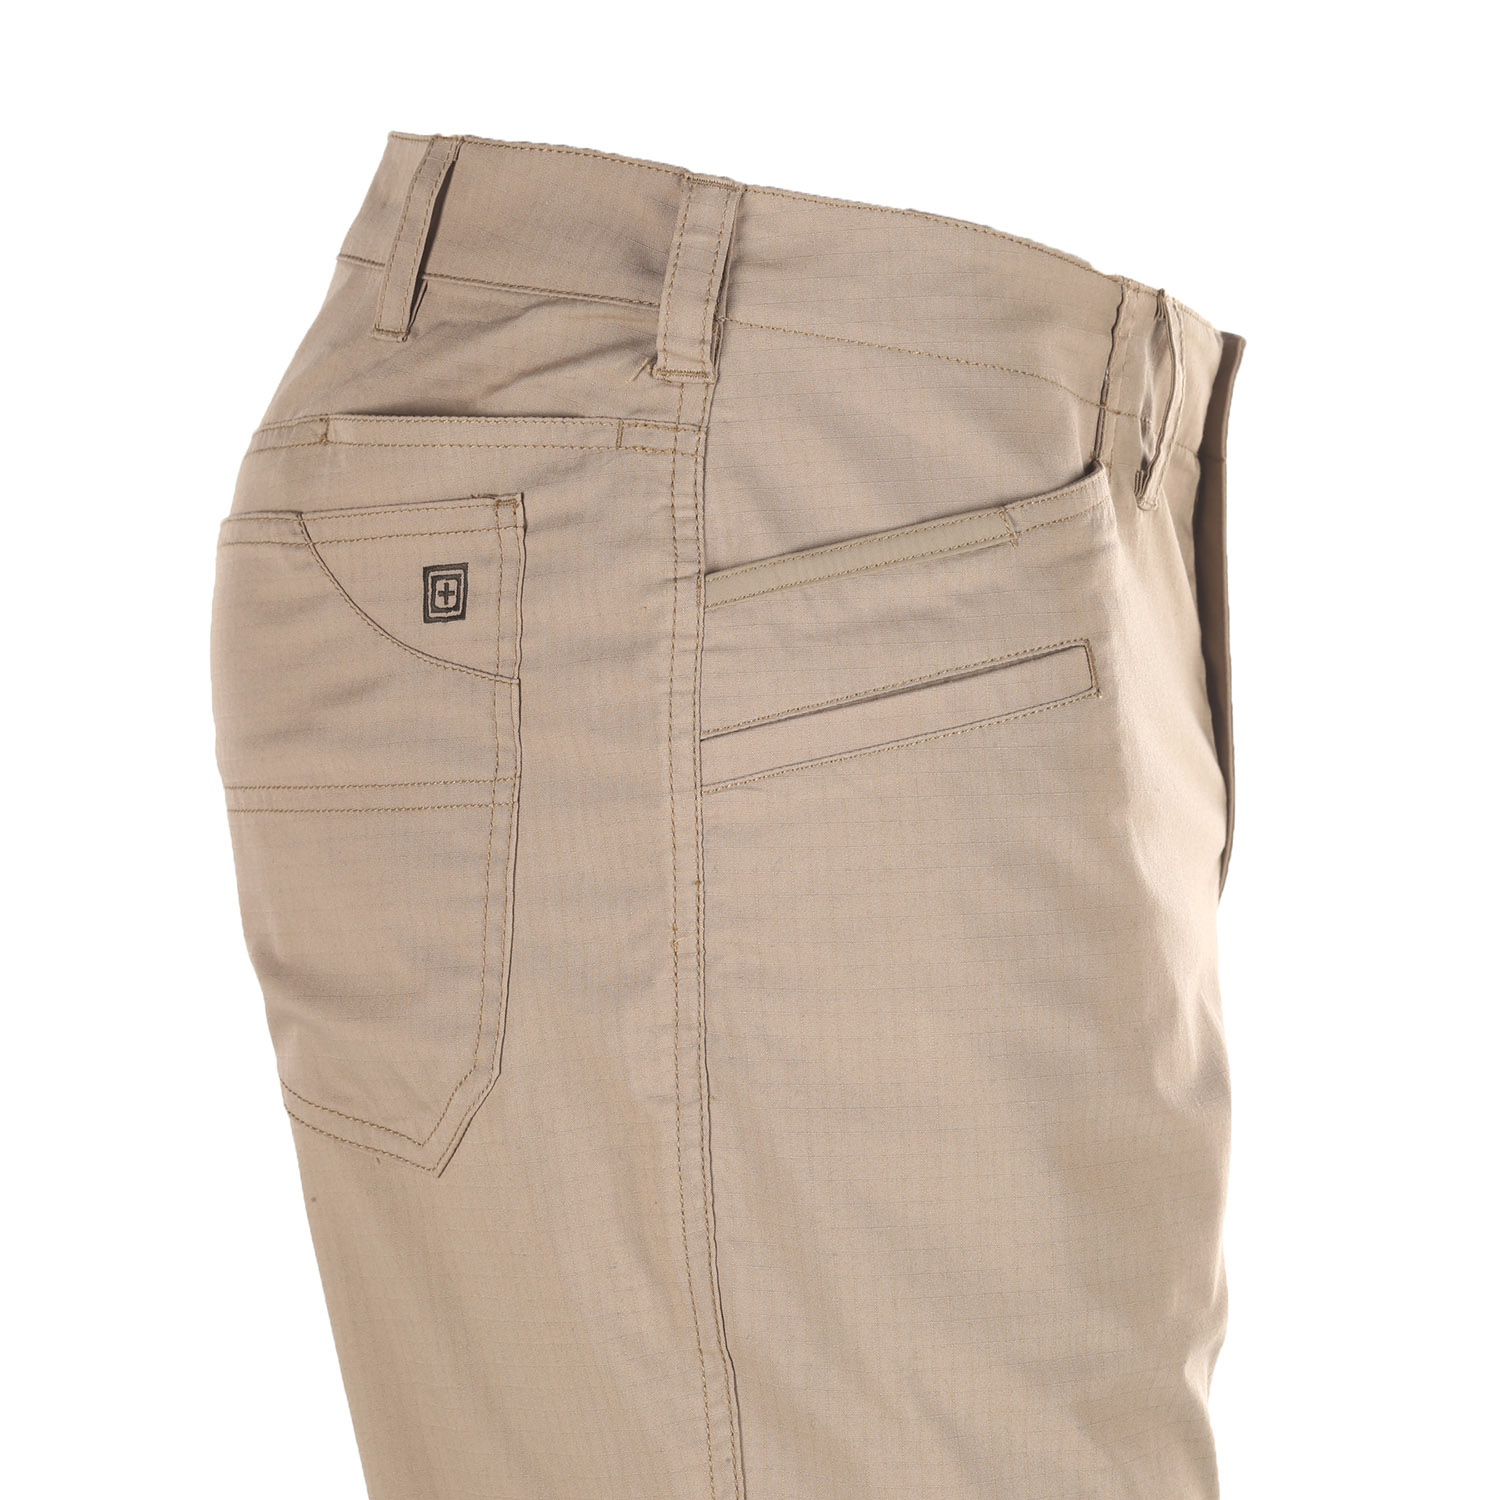 5.11 Tactical Ridgeline Pants